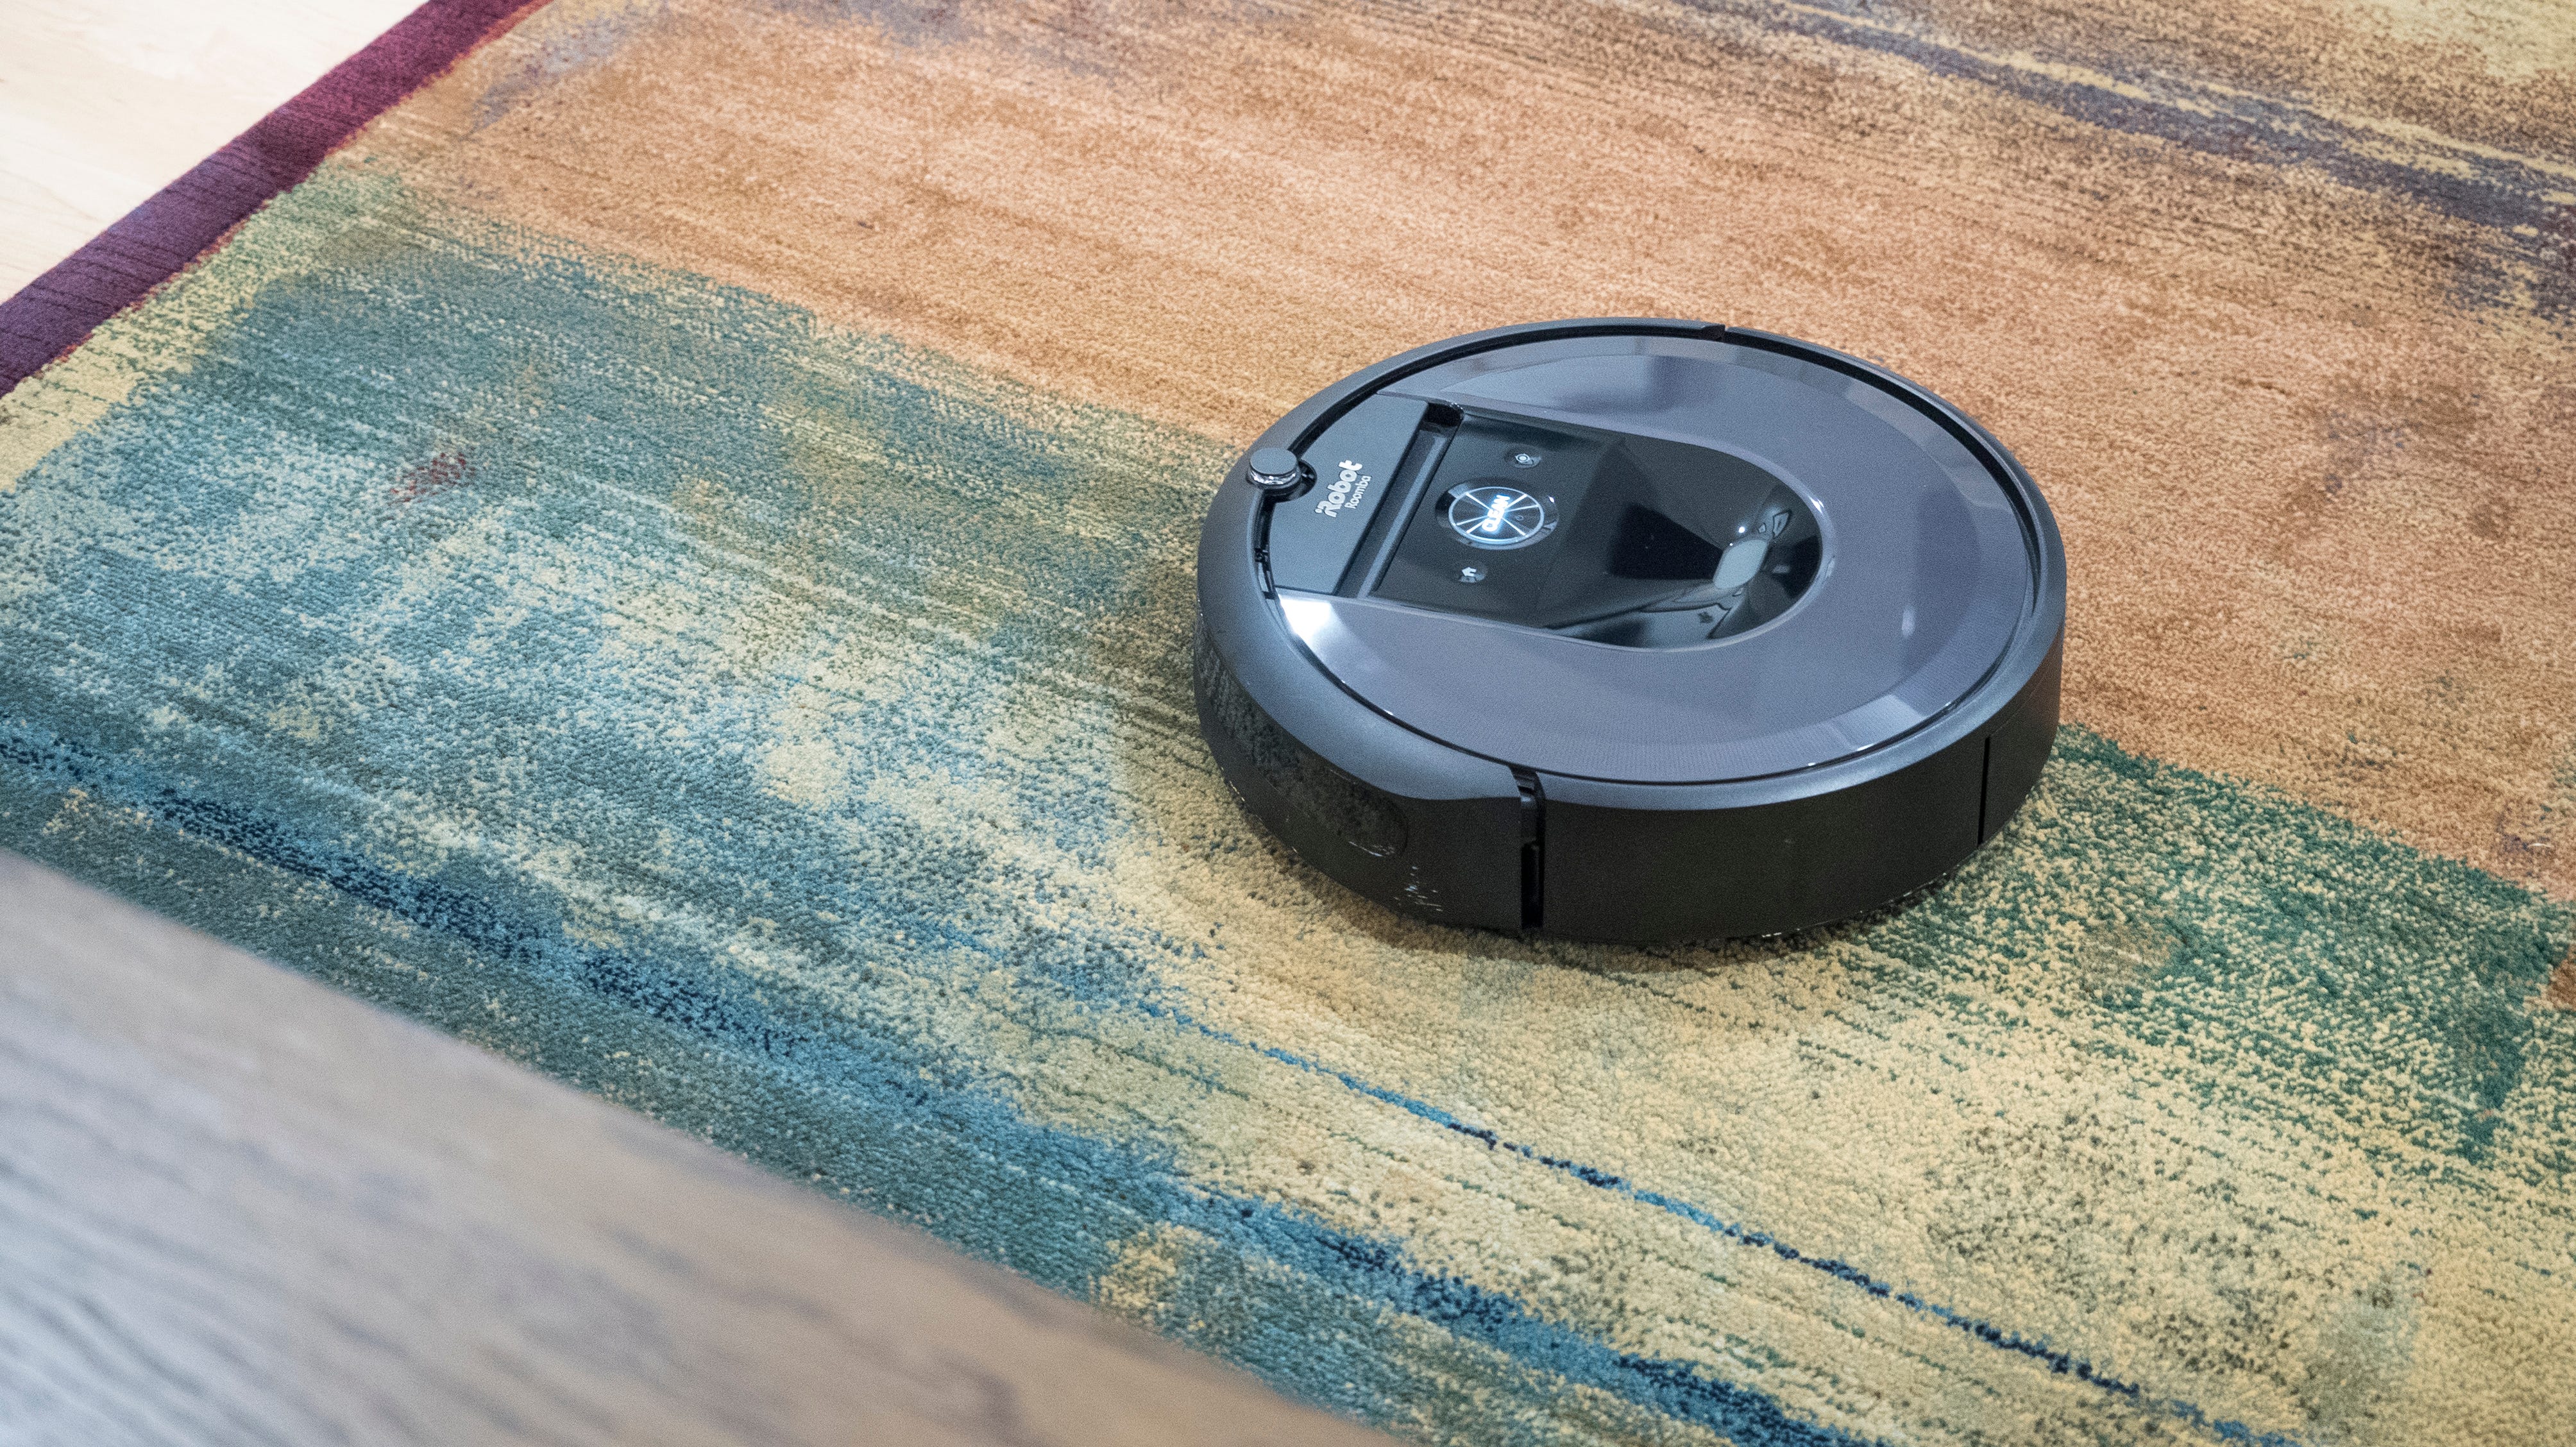 The Best Robot Vacuums For 2019 Irobot, Best Roomba Model For Hardwood Floors